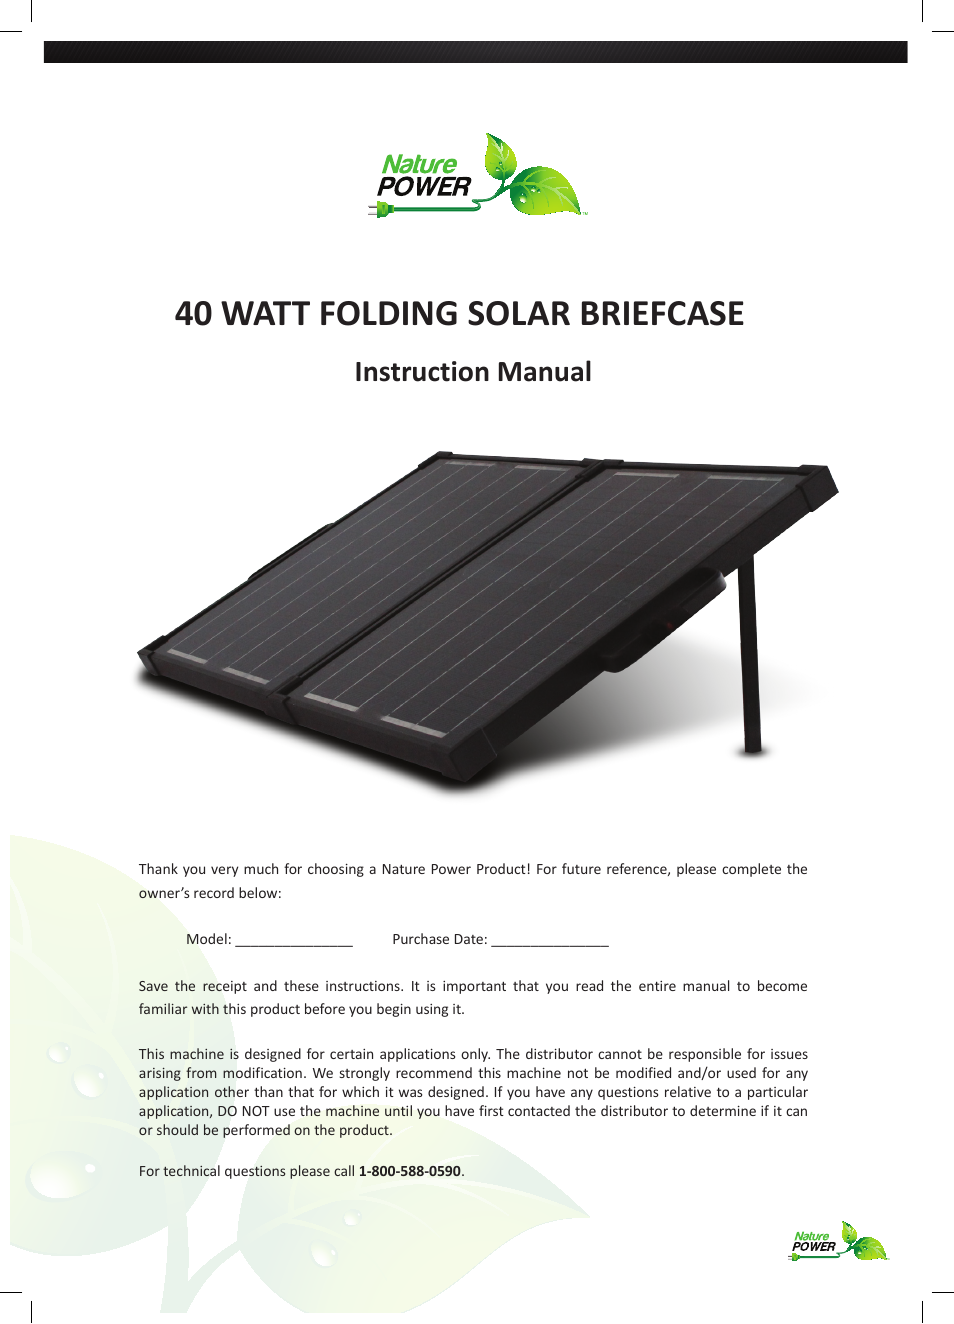 40 WATT FOLDING SOLAR BRIEFCASE (55701)